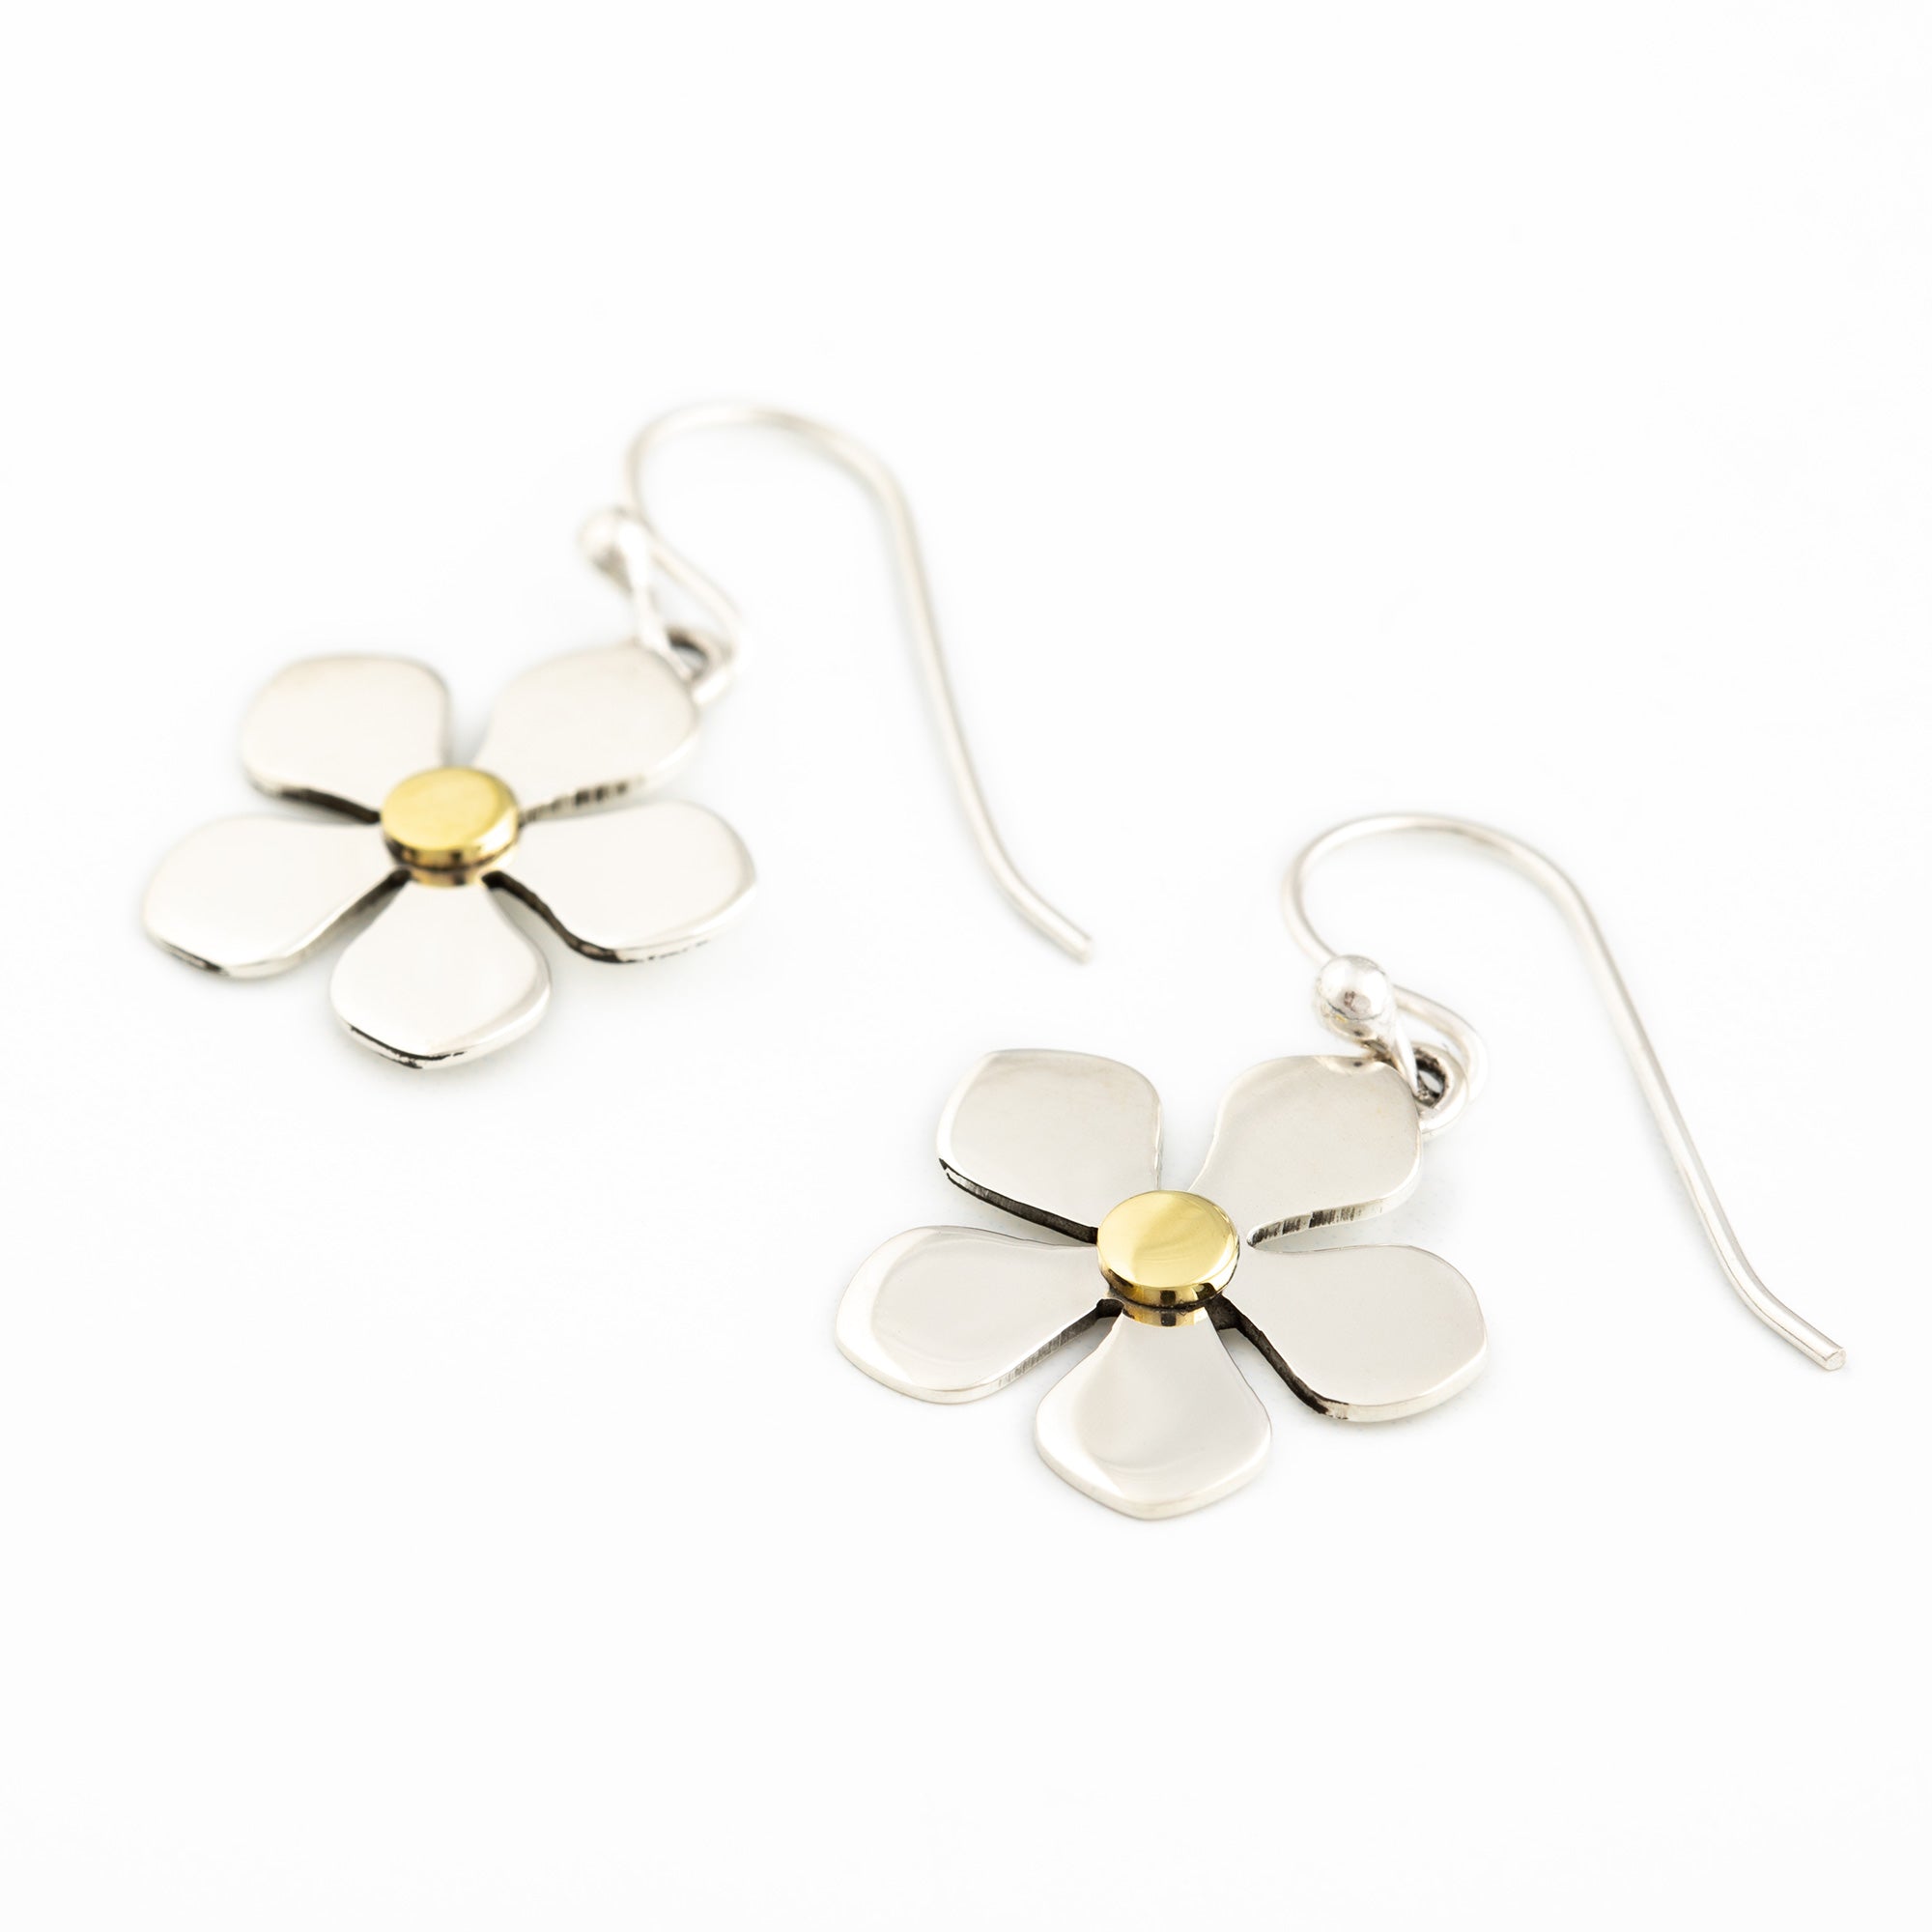 Mixed Metal Dangling Flower Earrings